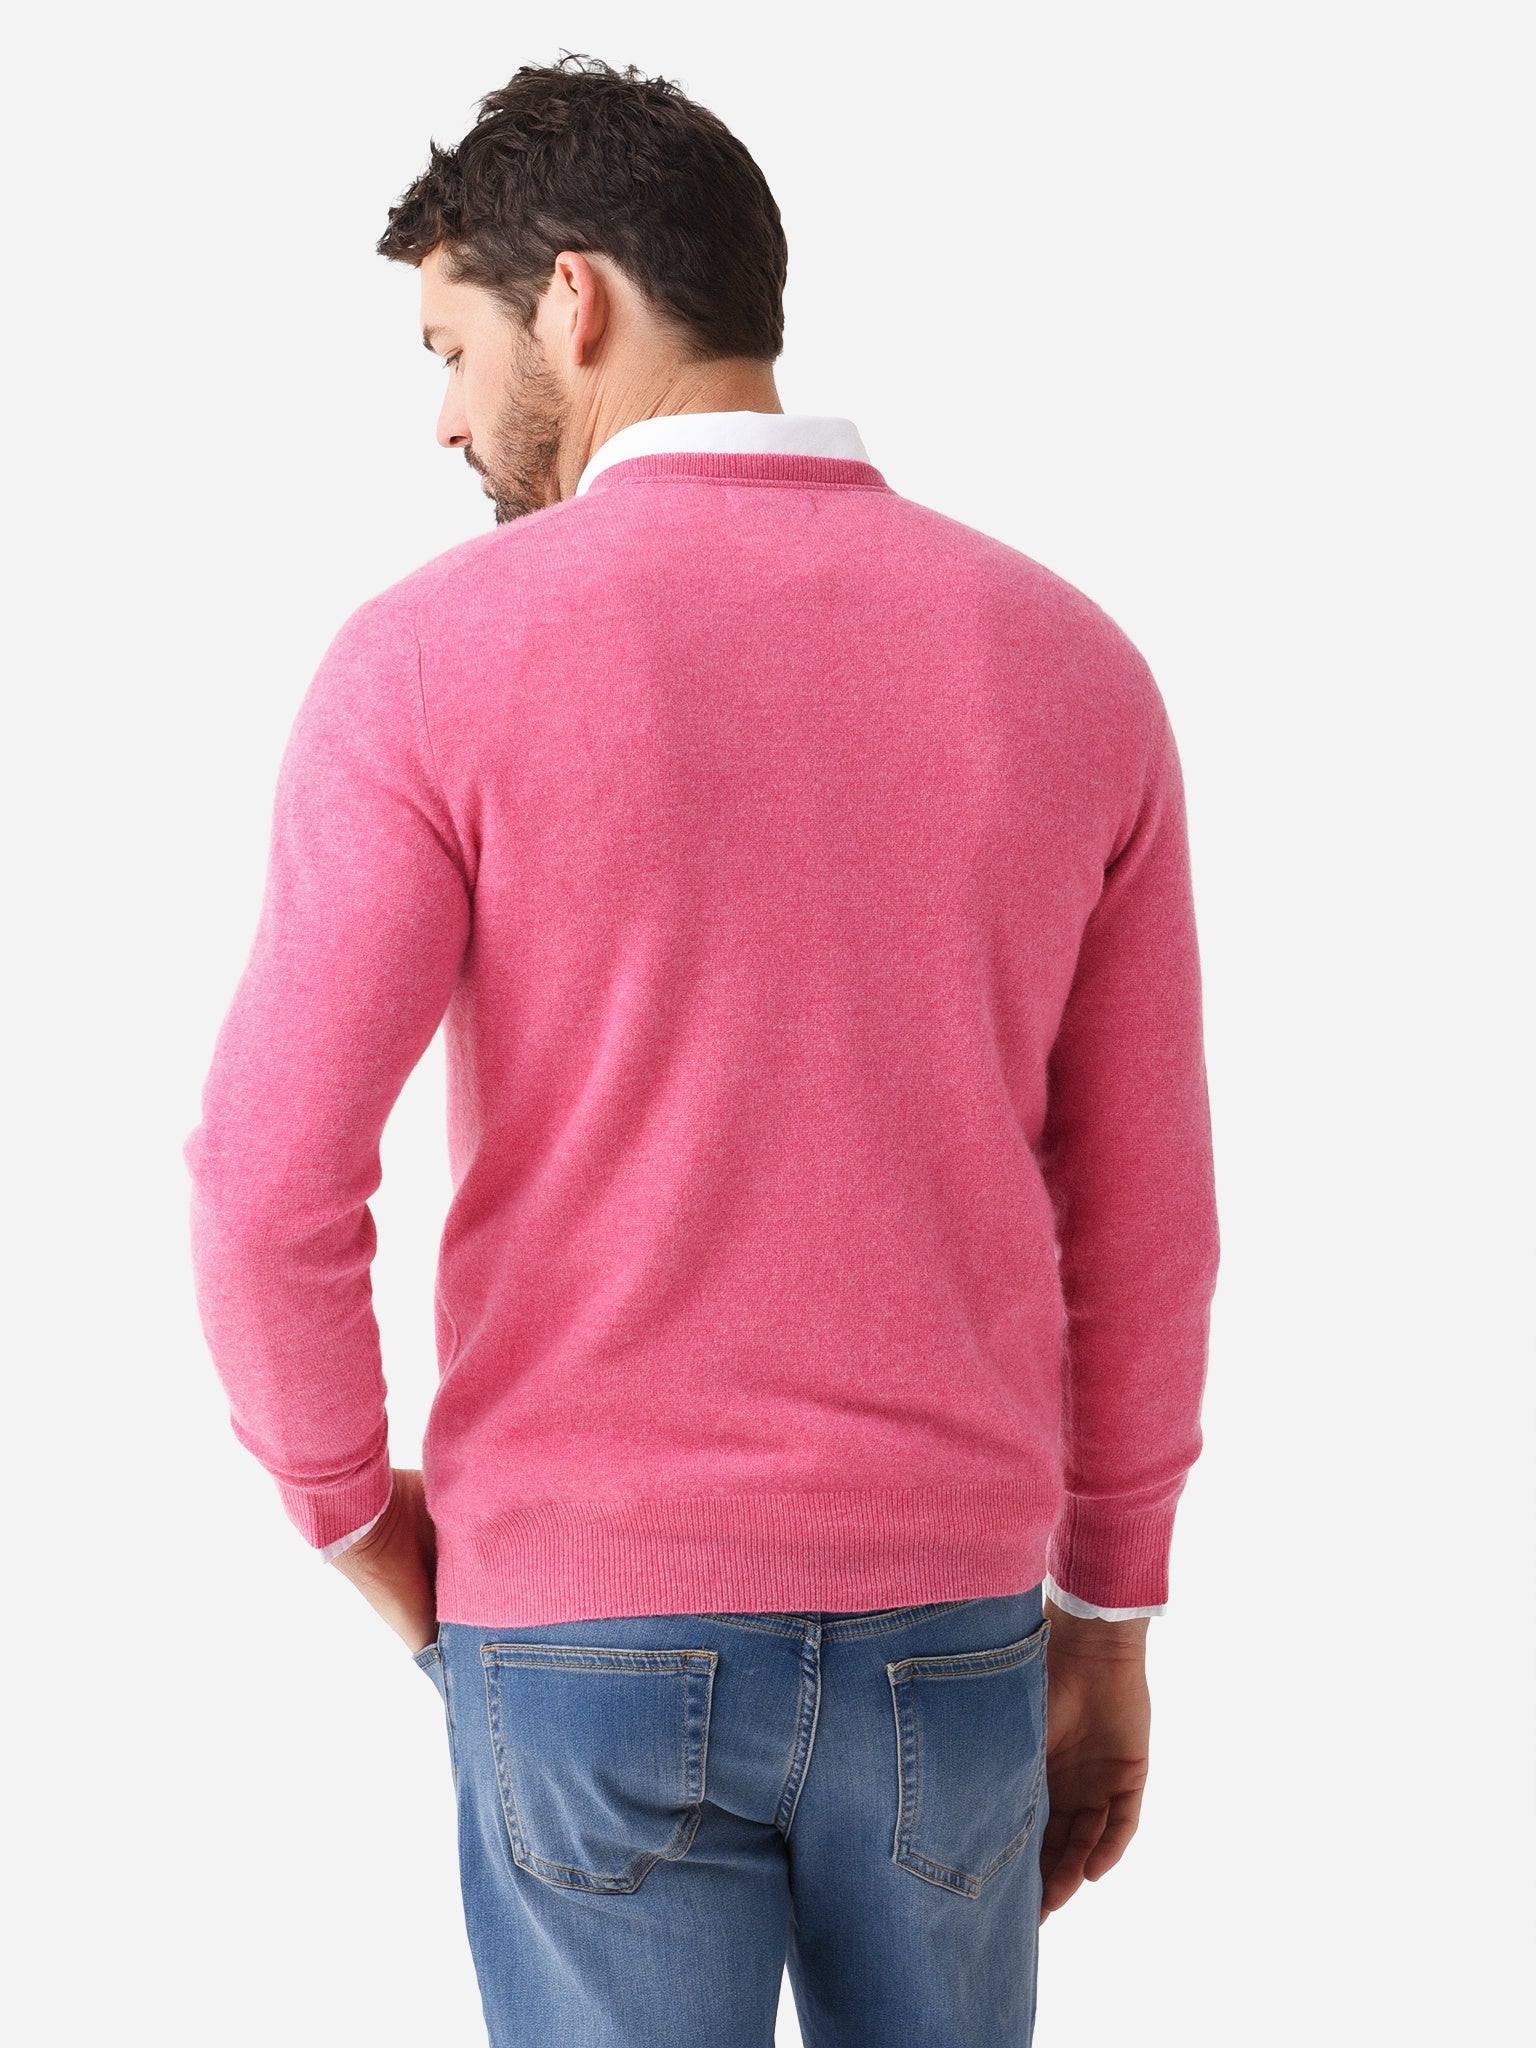 NAADAM Men's V-Neck Cashmere Sweater